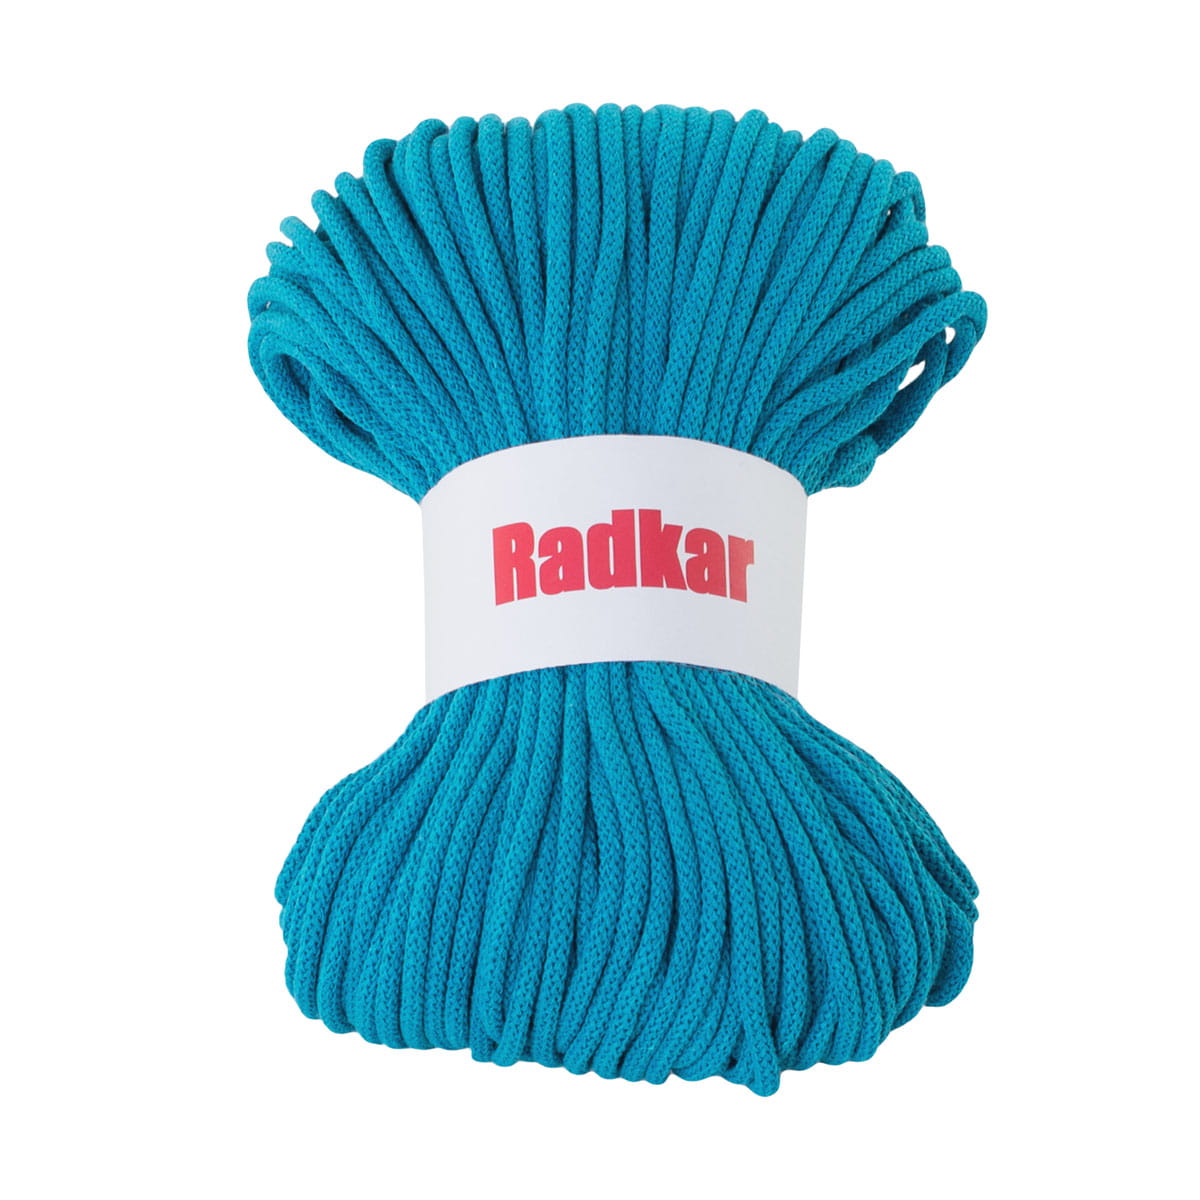 5mm cotton braided cord with core Radkar macrame knitting crochet craf